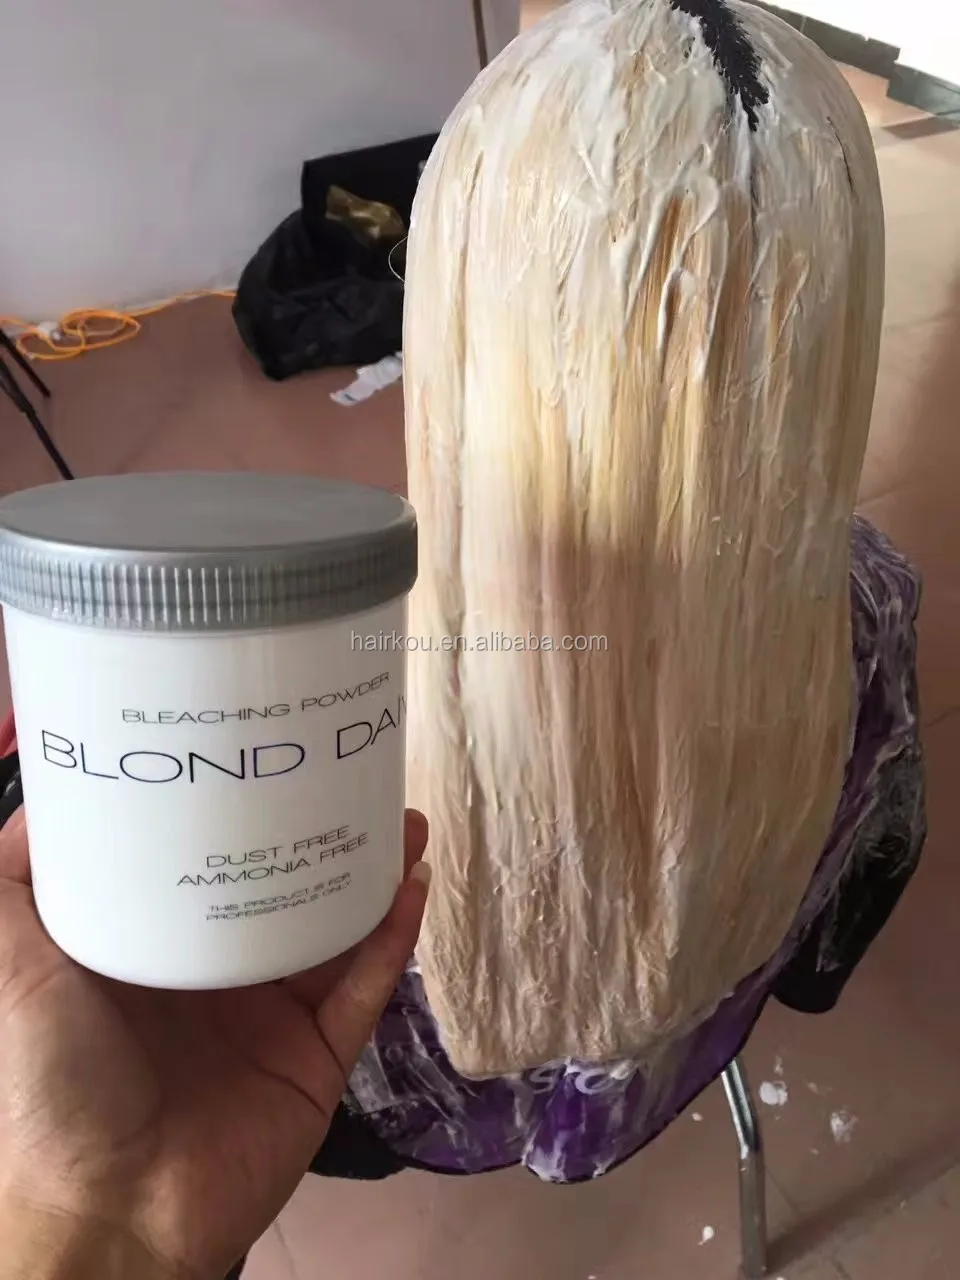 Hairkou Rankous Brand 500g Blue Bleach Hair Powder Oem Available